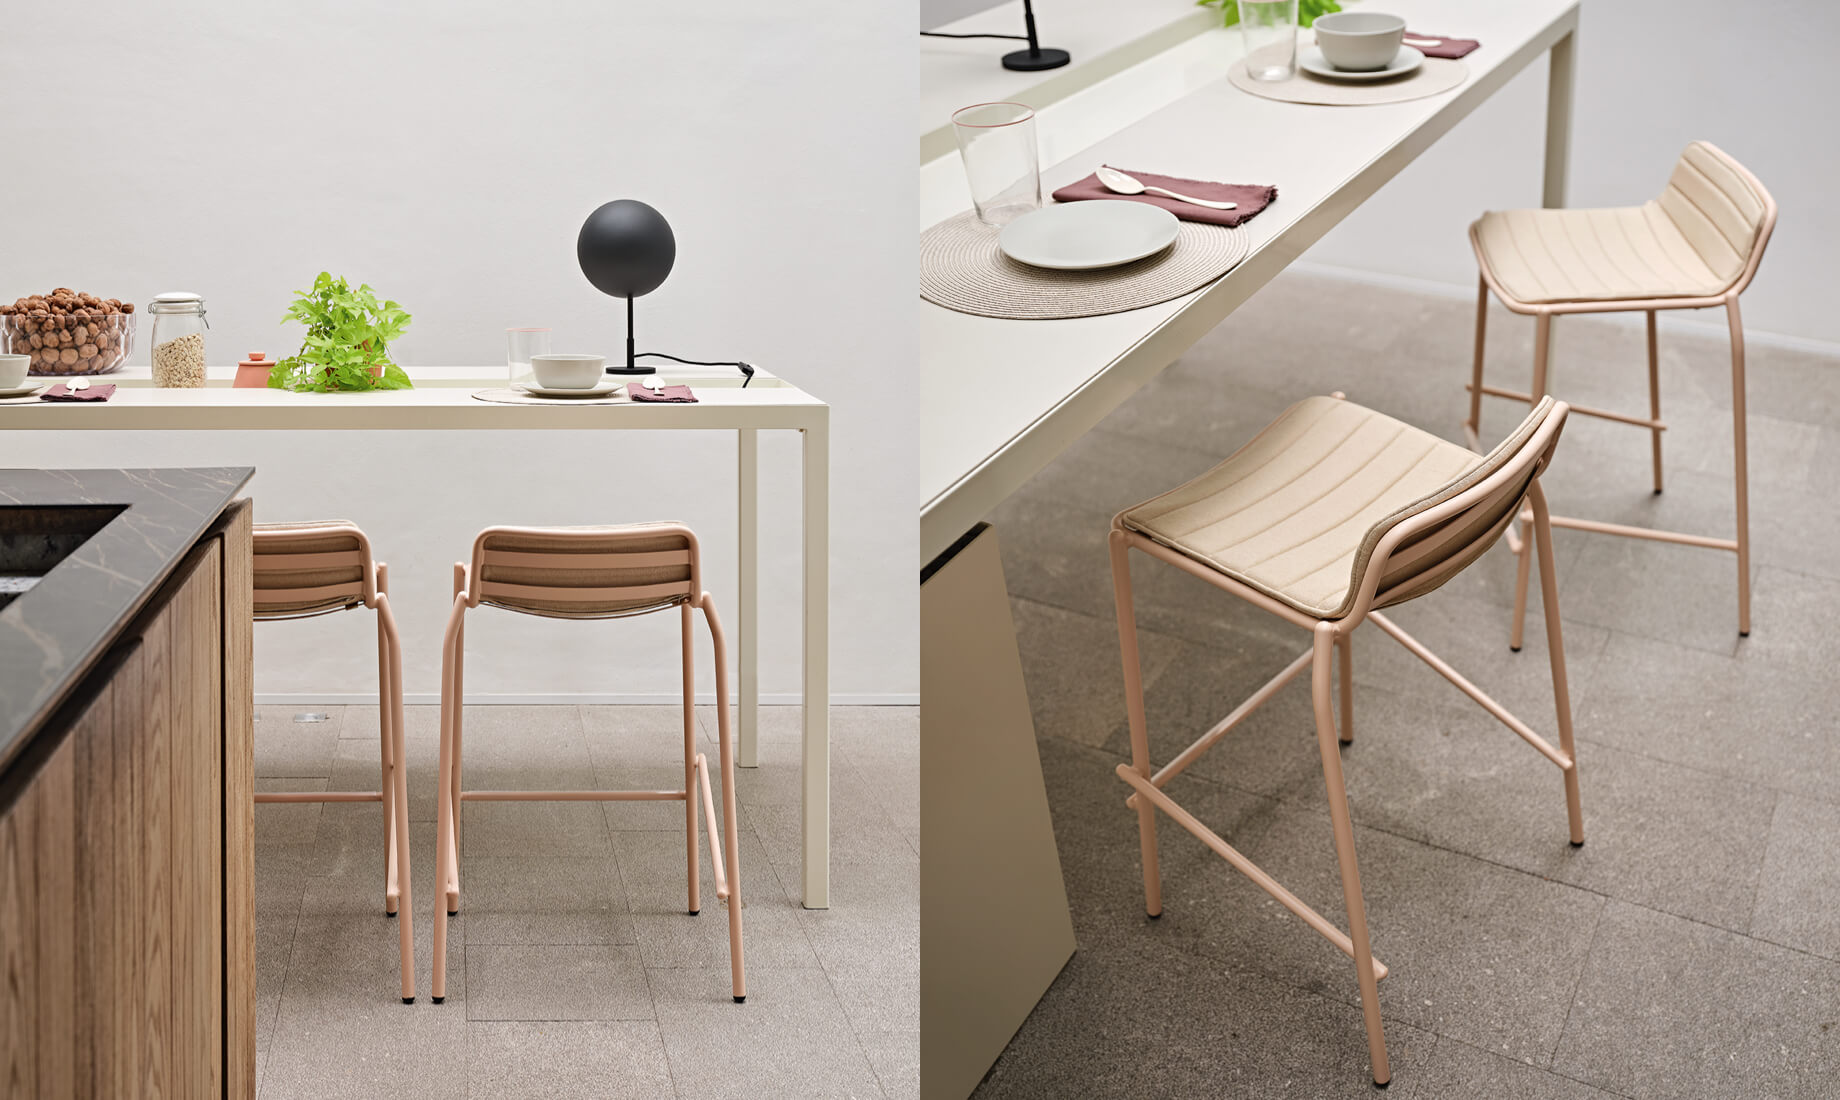 Trampoliere stools, design Roberto Paoli with Charlotte table lamp, design Tomas Dalla Torre.